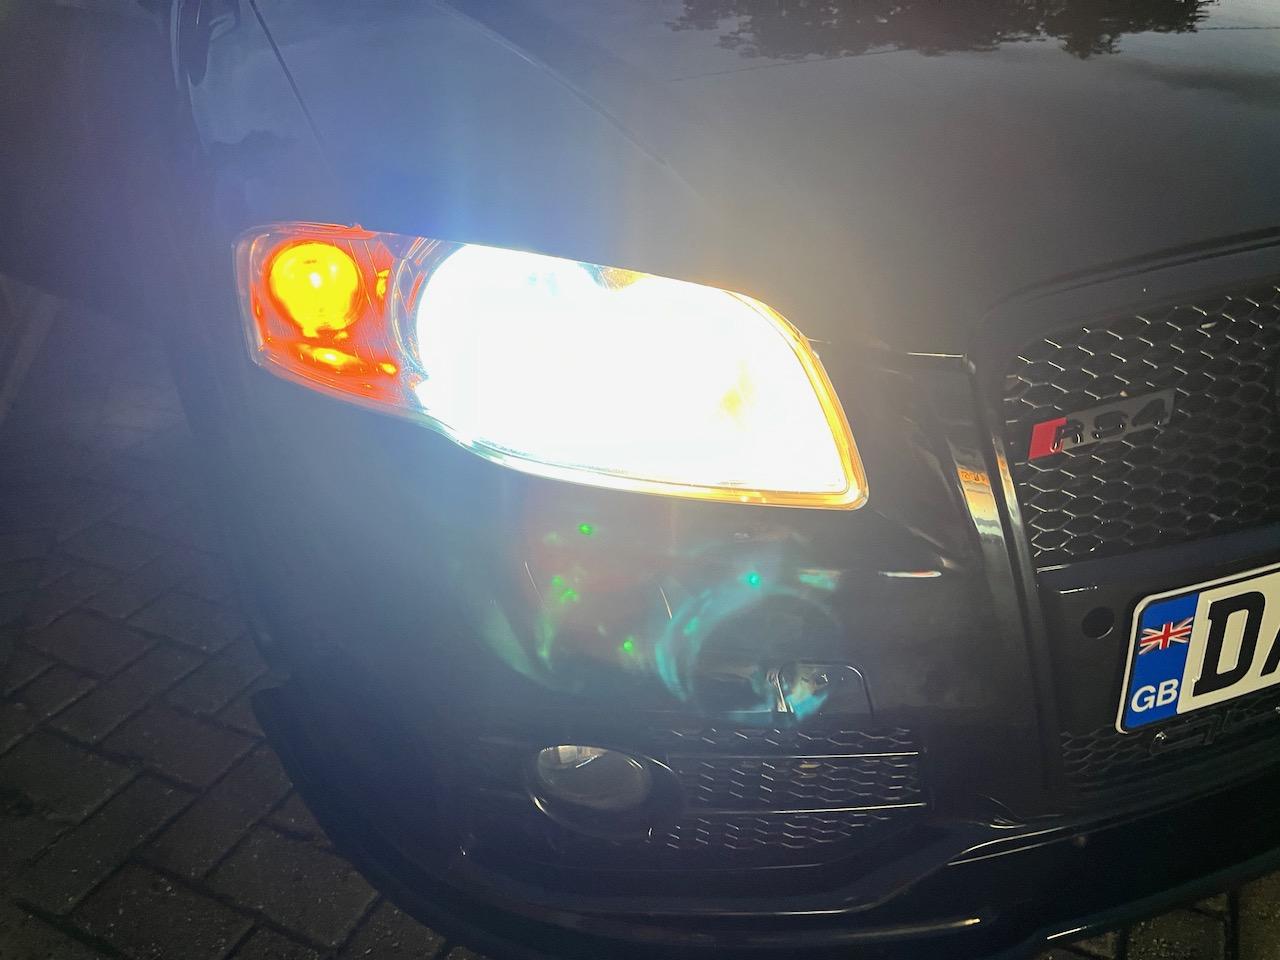 Audi A4 B7 Headlight repair & upgrade kits HID xenon LED